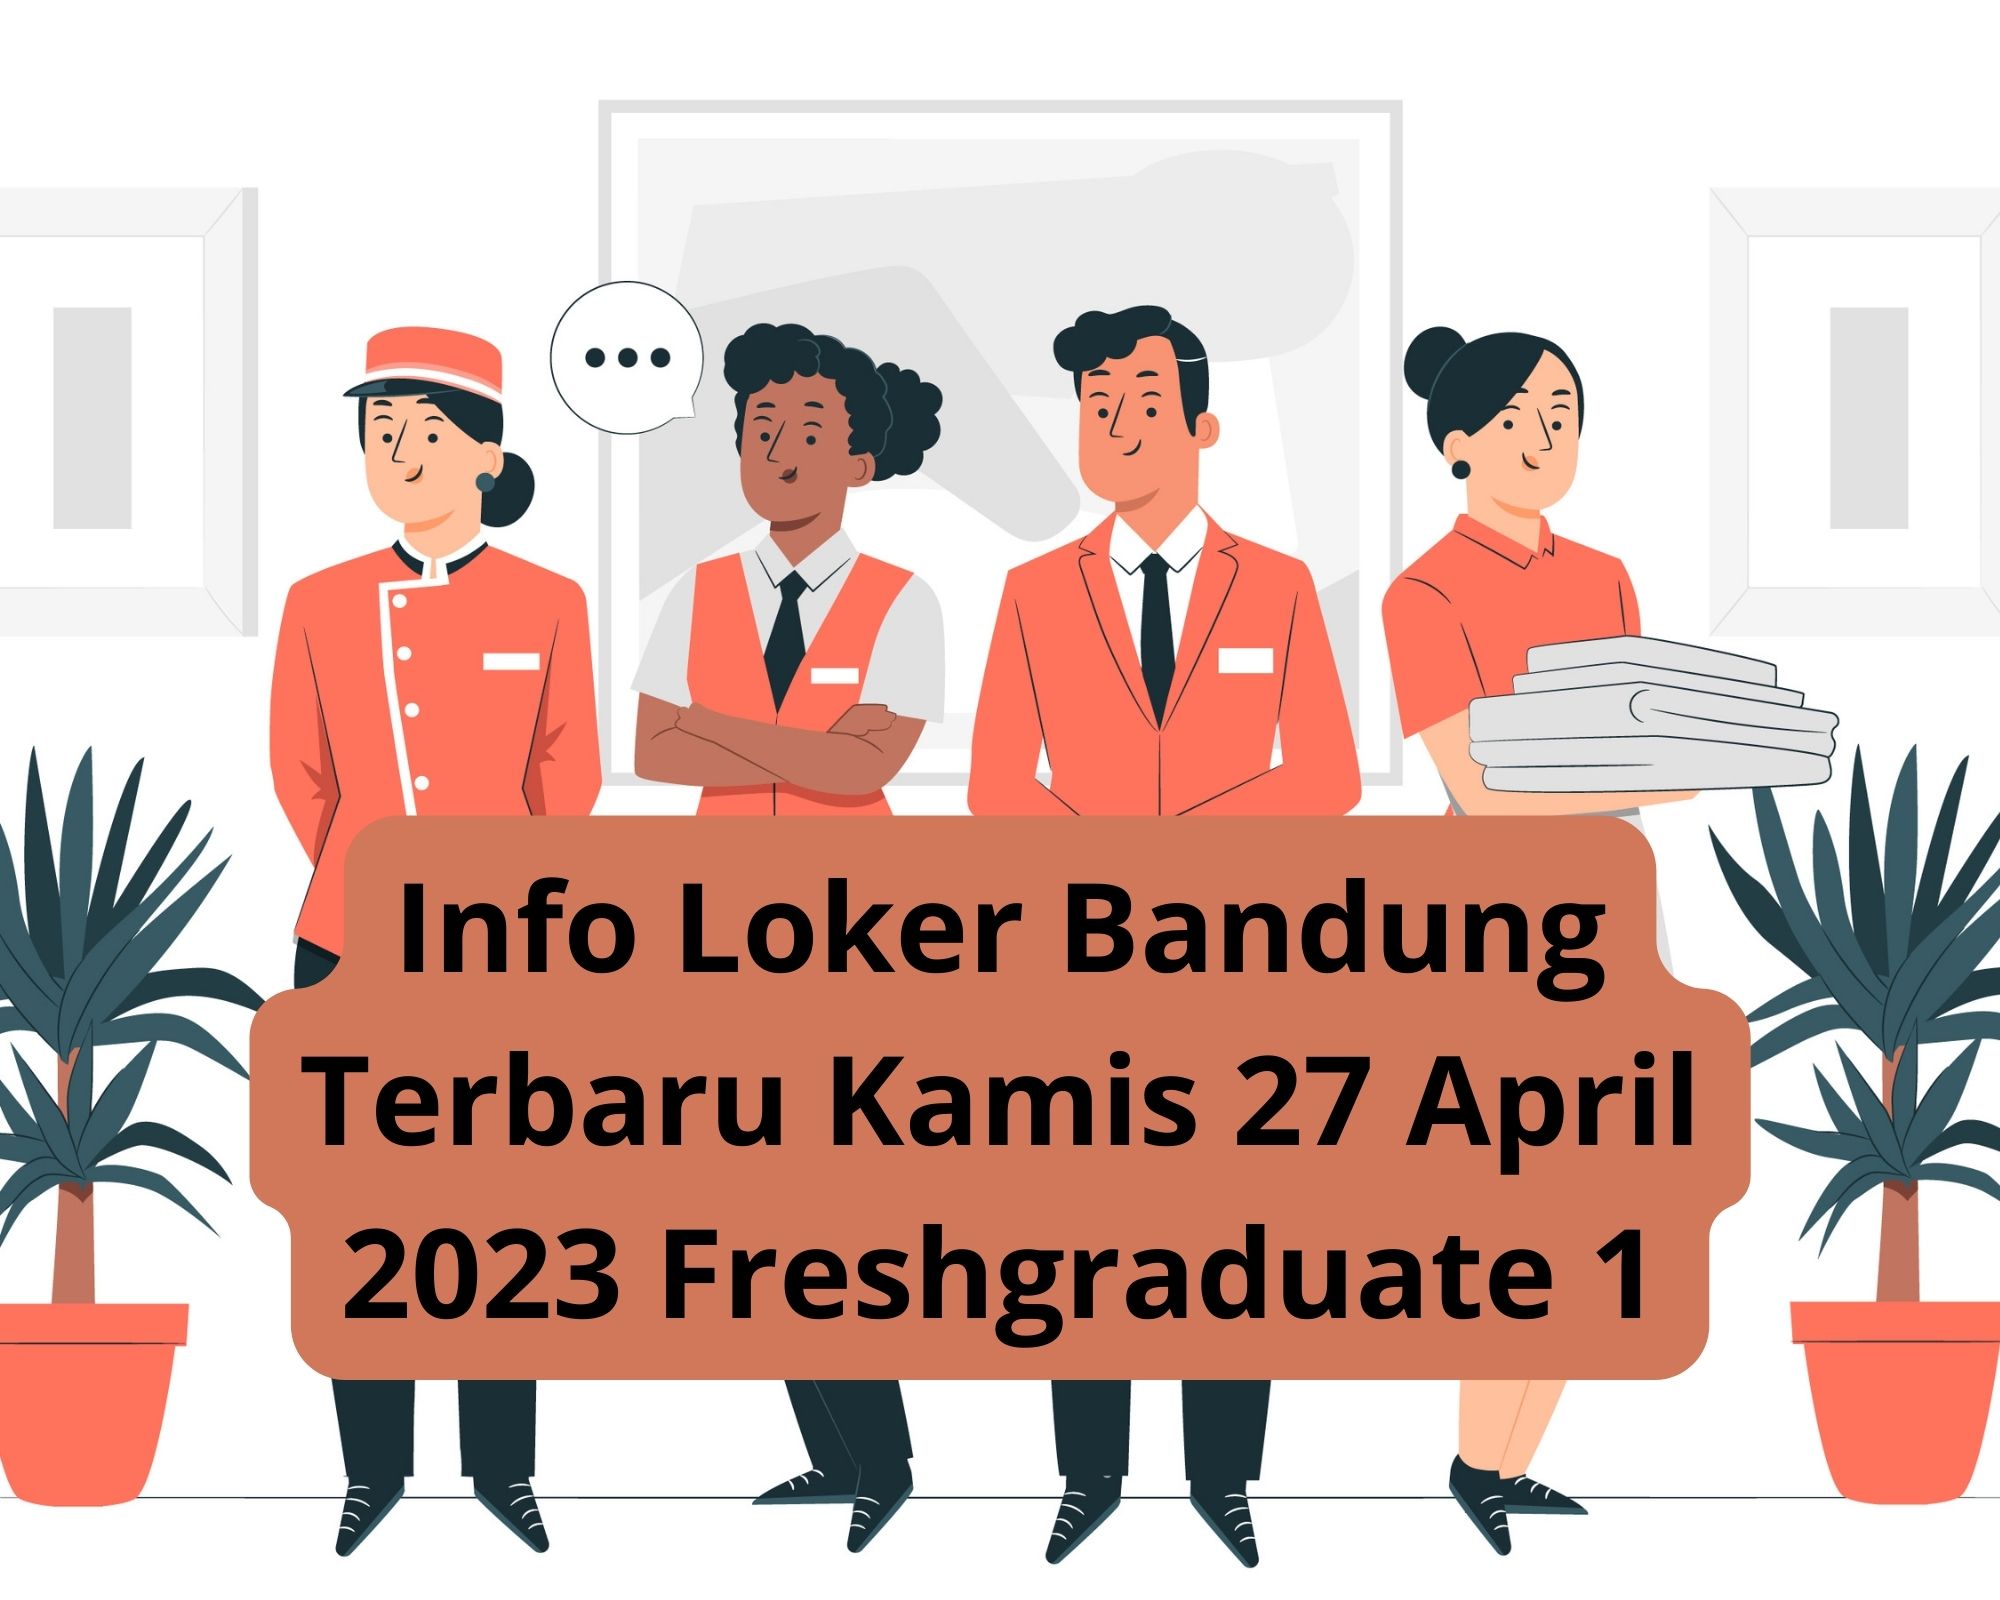 Info Loker Bandung Terbaru Kamis 27 April 2023 Freshgraduate 1